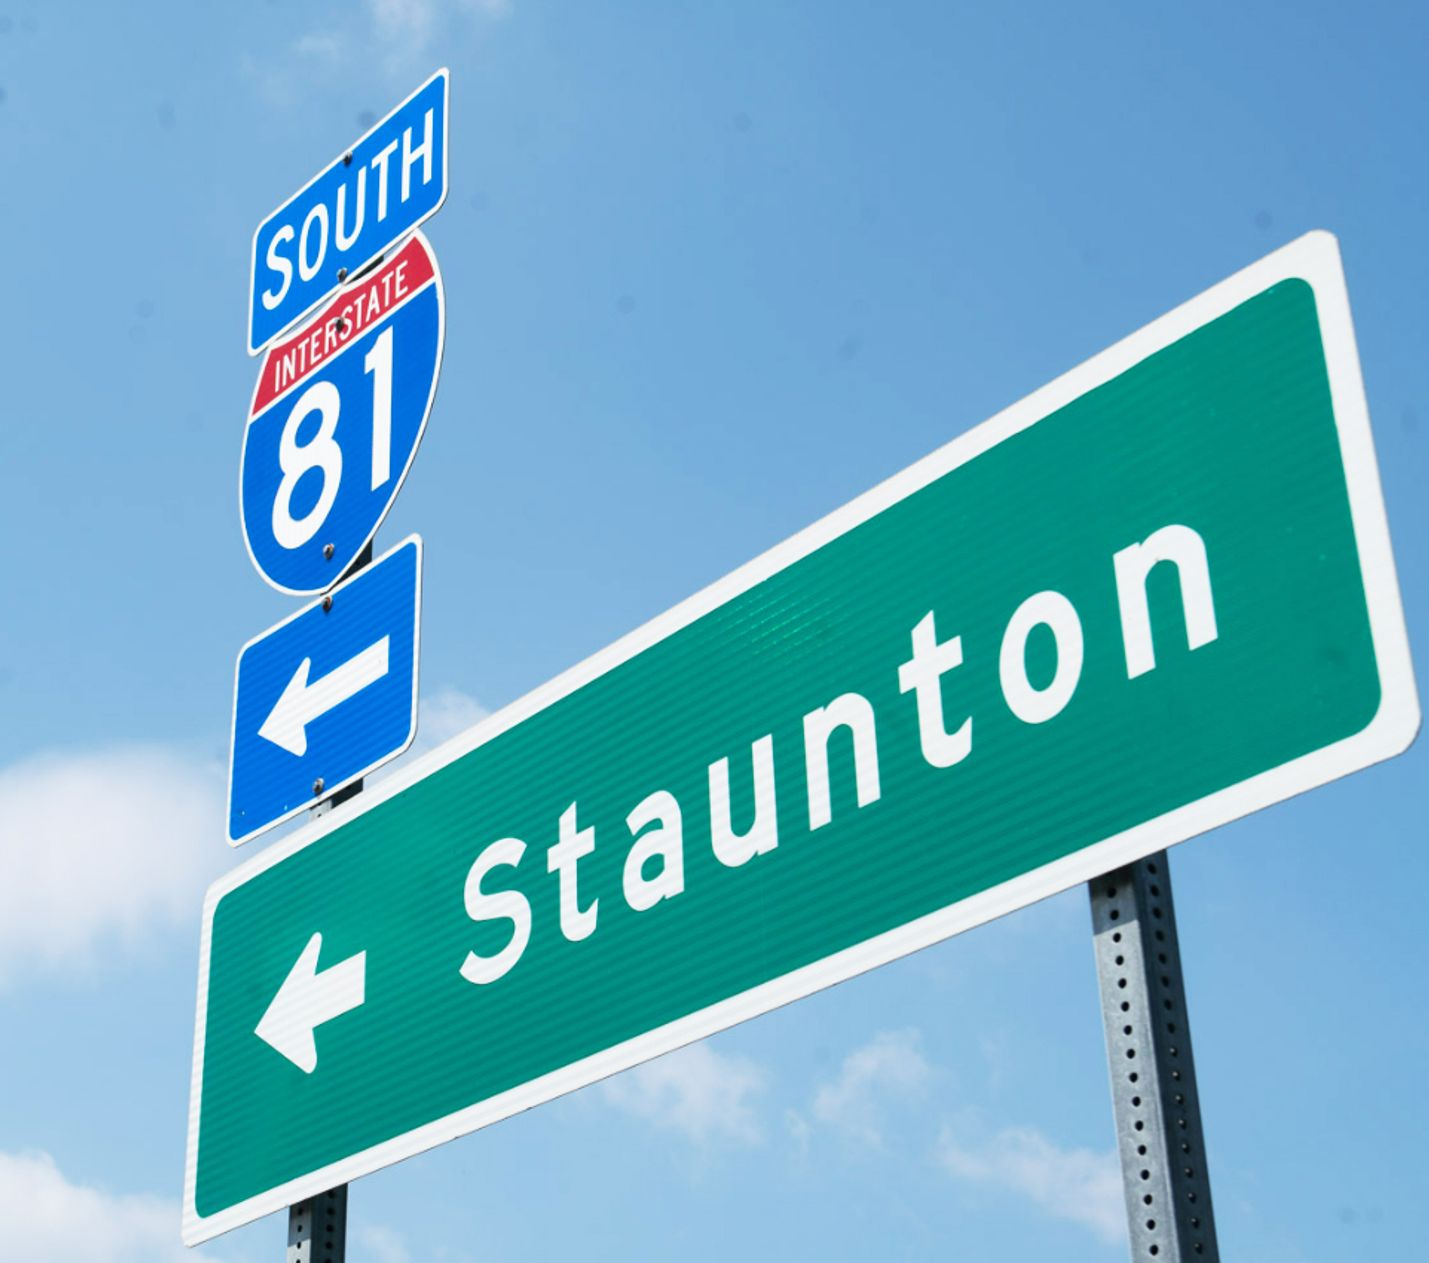 I-81 Staunton